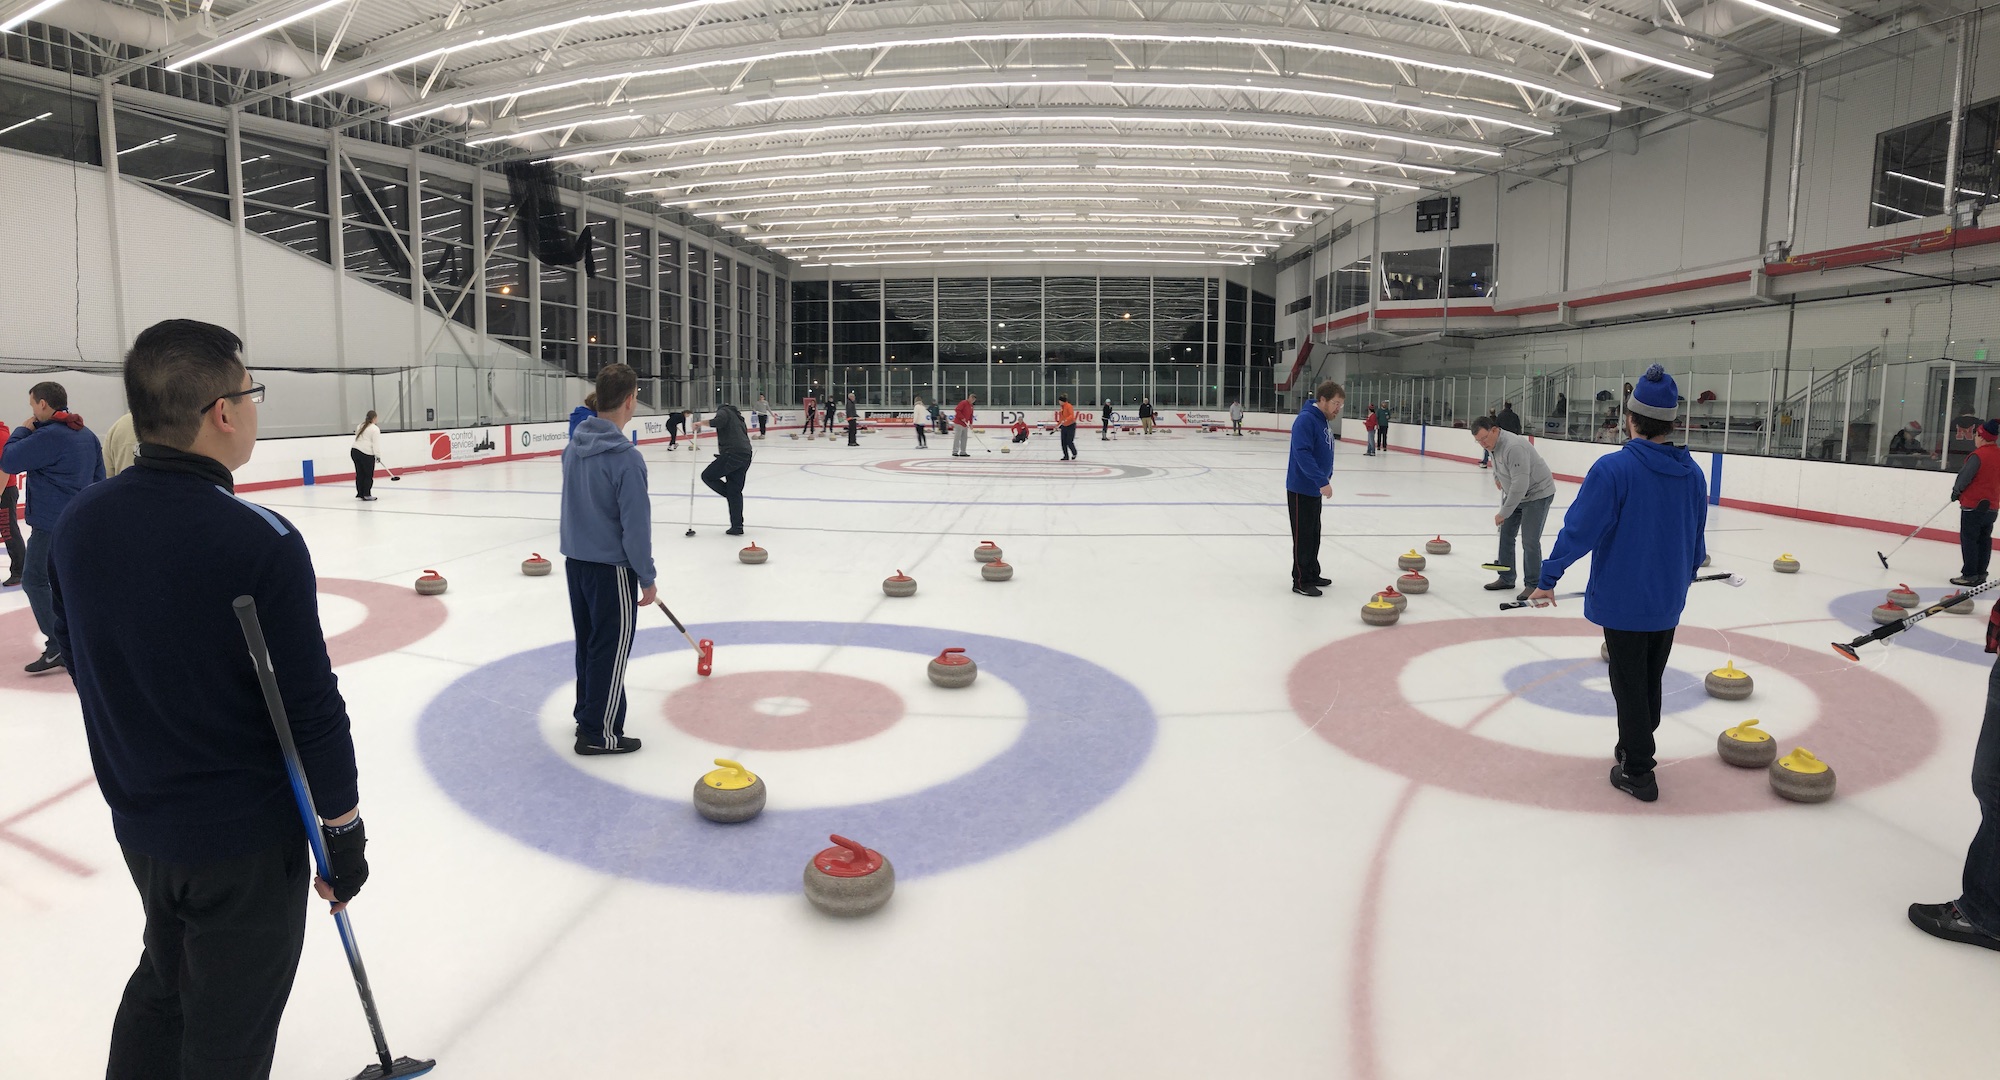 Practice Ice / Drop-in Curling - Friday, Feb 11, 2022